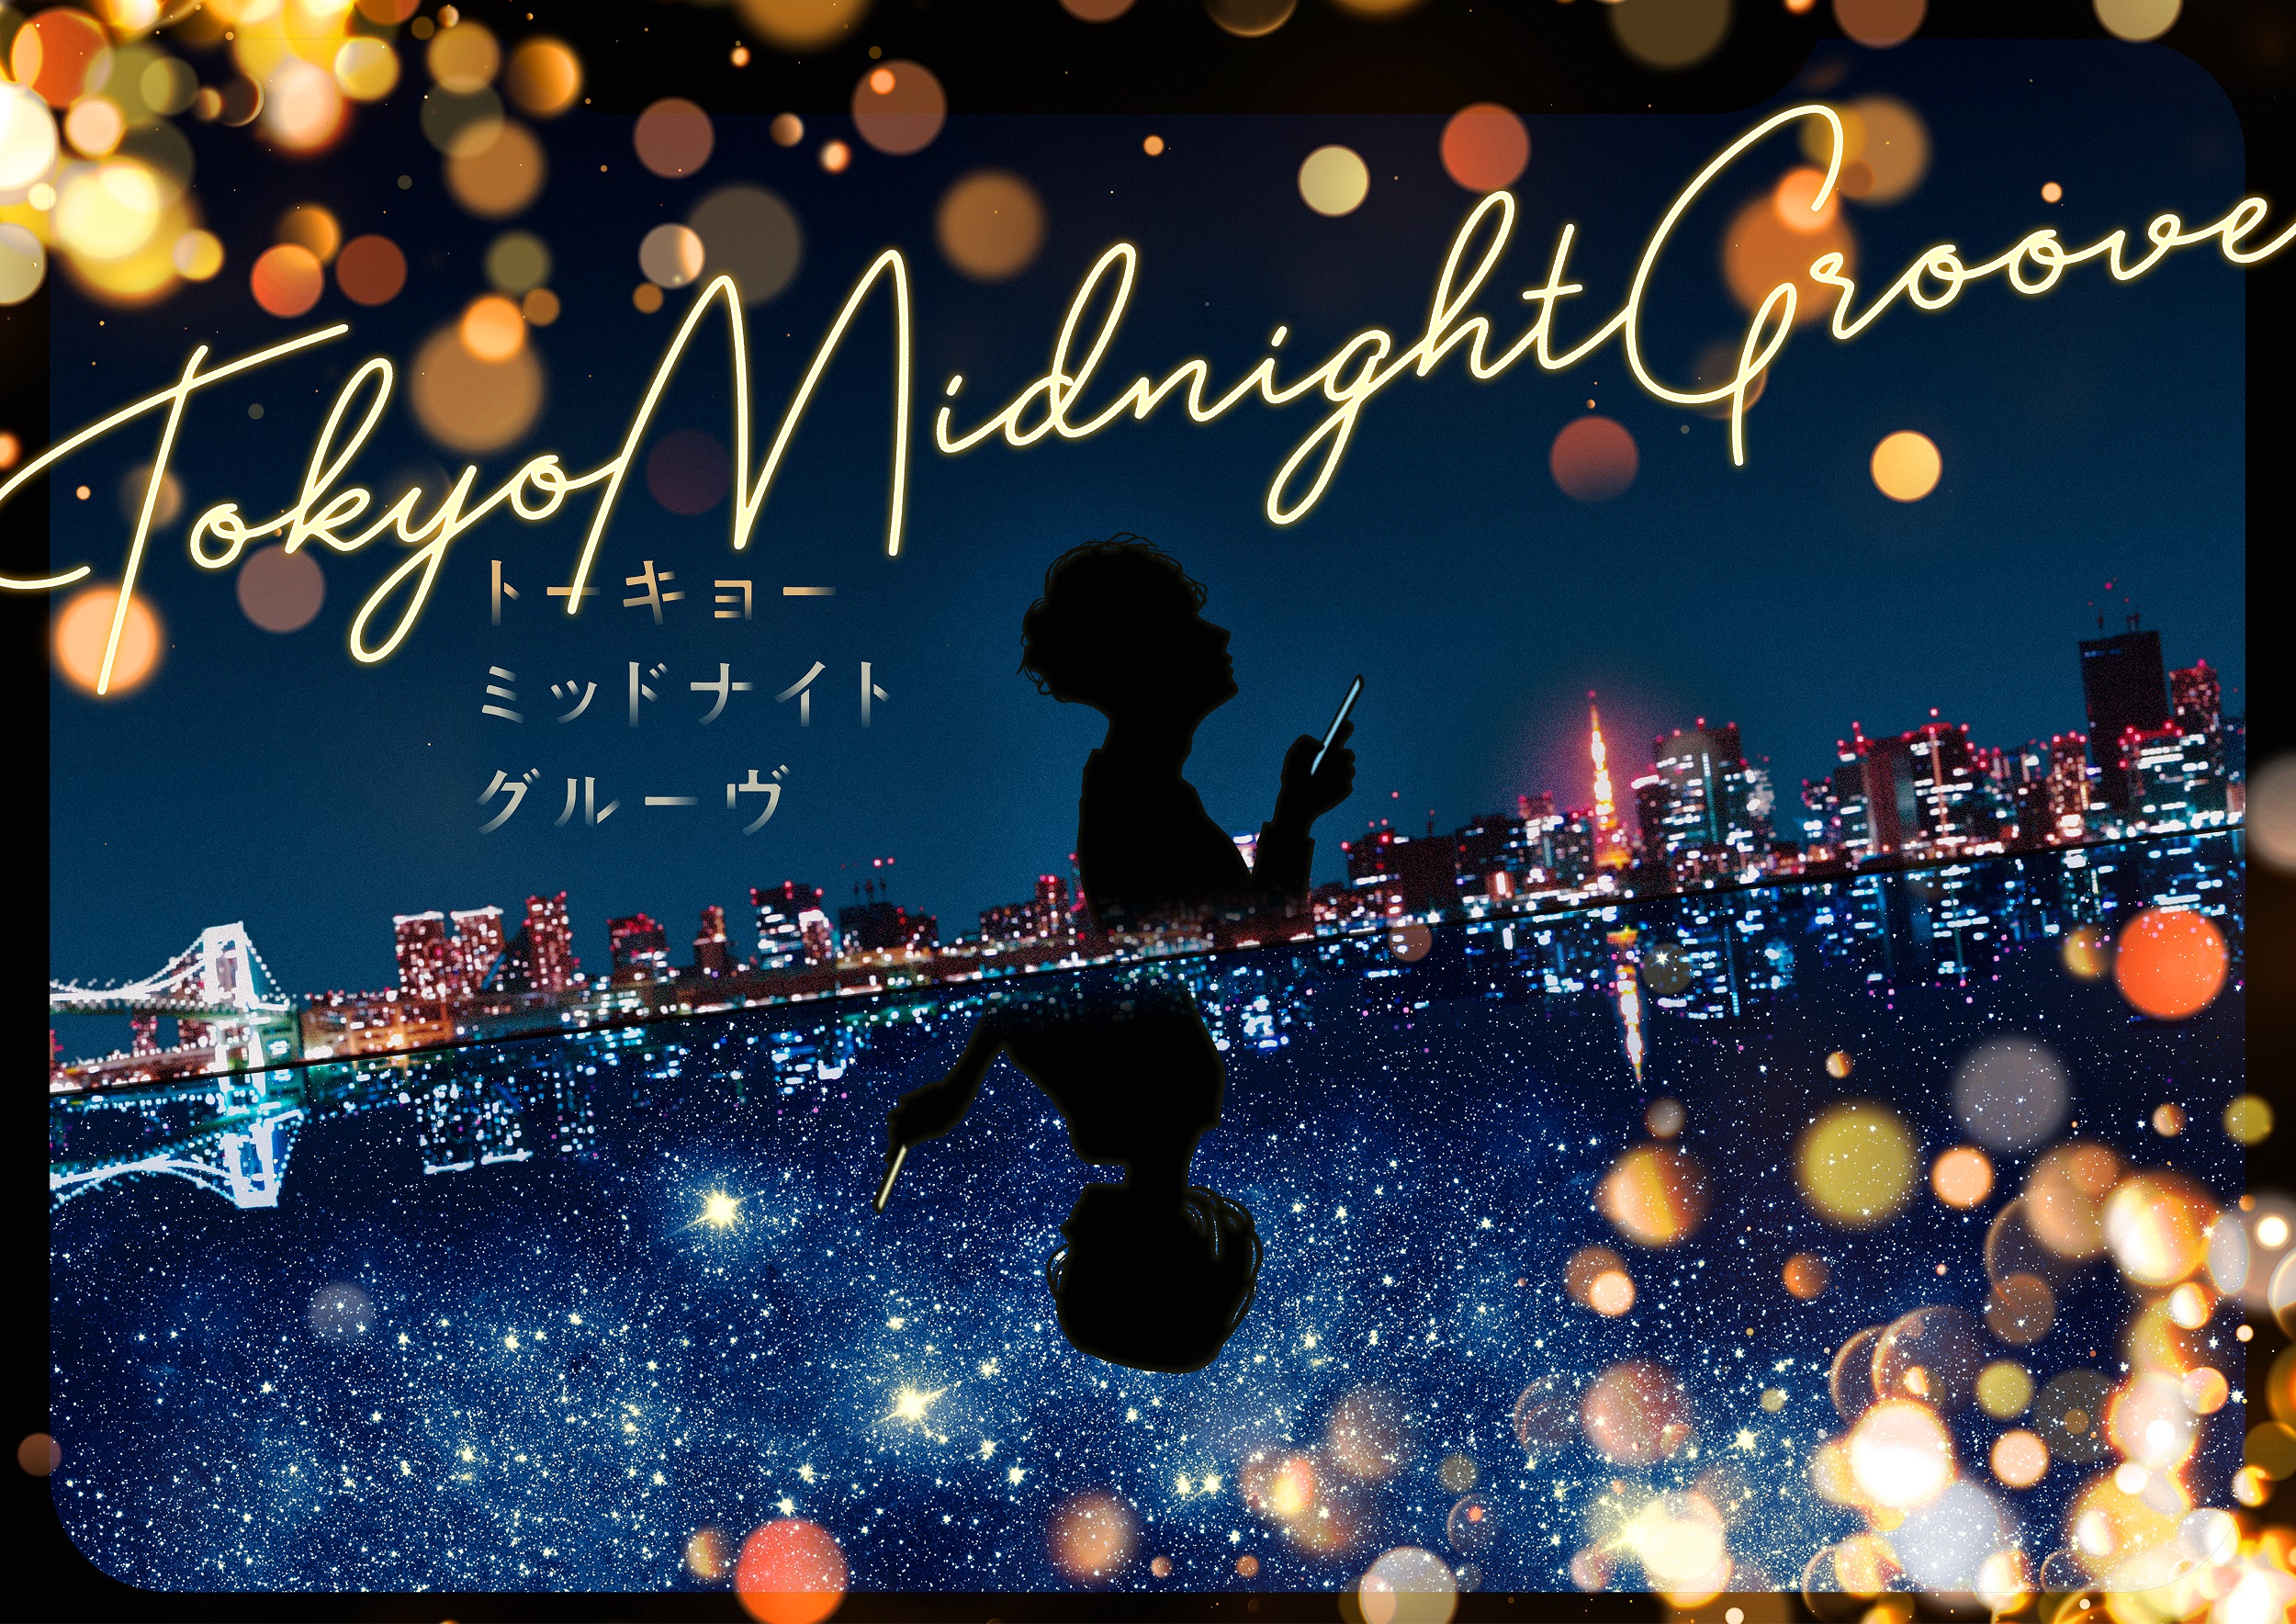 Tokyo Midnight Gr oove_作品ビジュアル